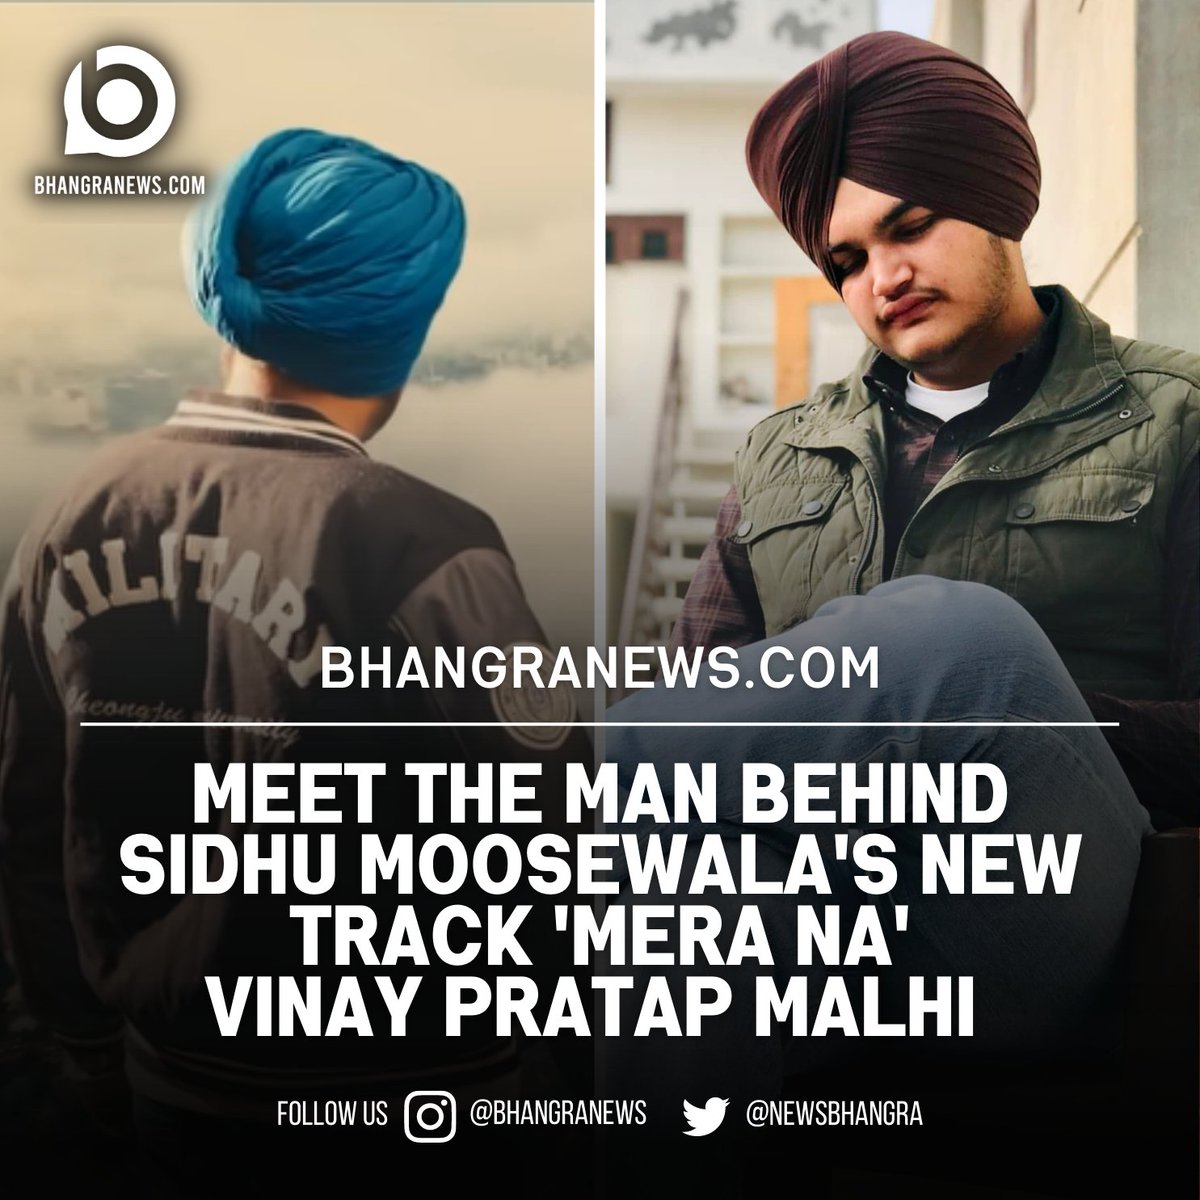 Meet the man behind @iSidhuMooseWala 's physical presence in the #MeraNa music video: Vinay Pratap Malhi. Read the full article: bhangranews.com/meet-the-man-b… #bhangranews #merana #sidhumoosewala #steelbanglez #burnaboy #vinaypratapmalhi #navkaranbrar #insidemotionpictures